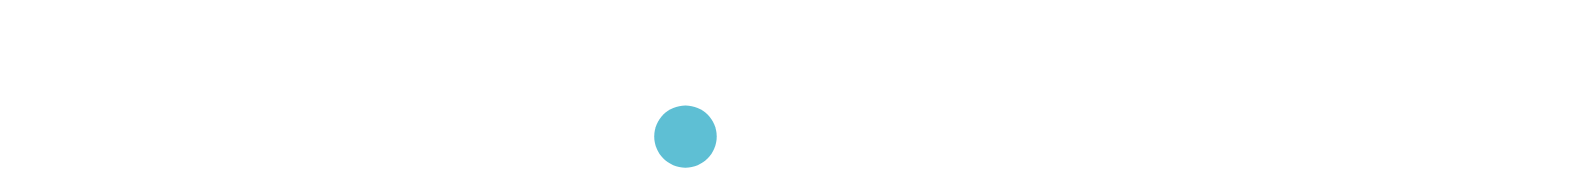 Thales logo large for dark backgrounds (transparent PNG)